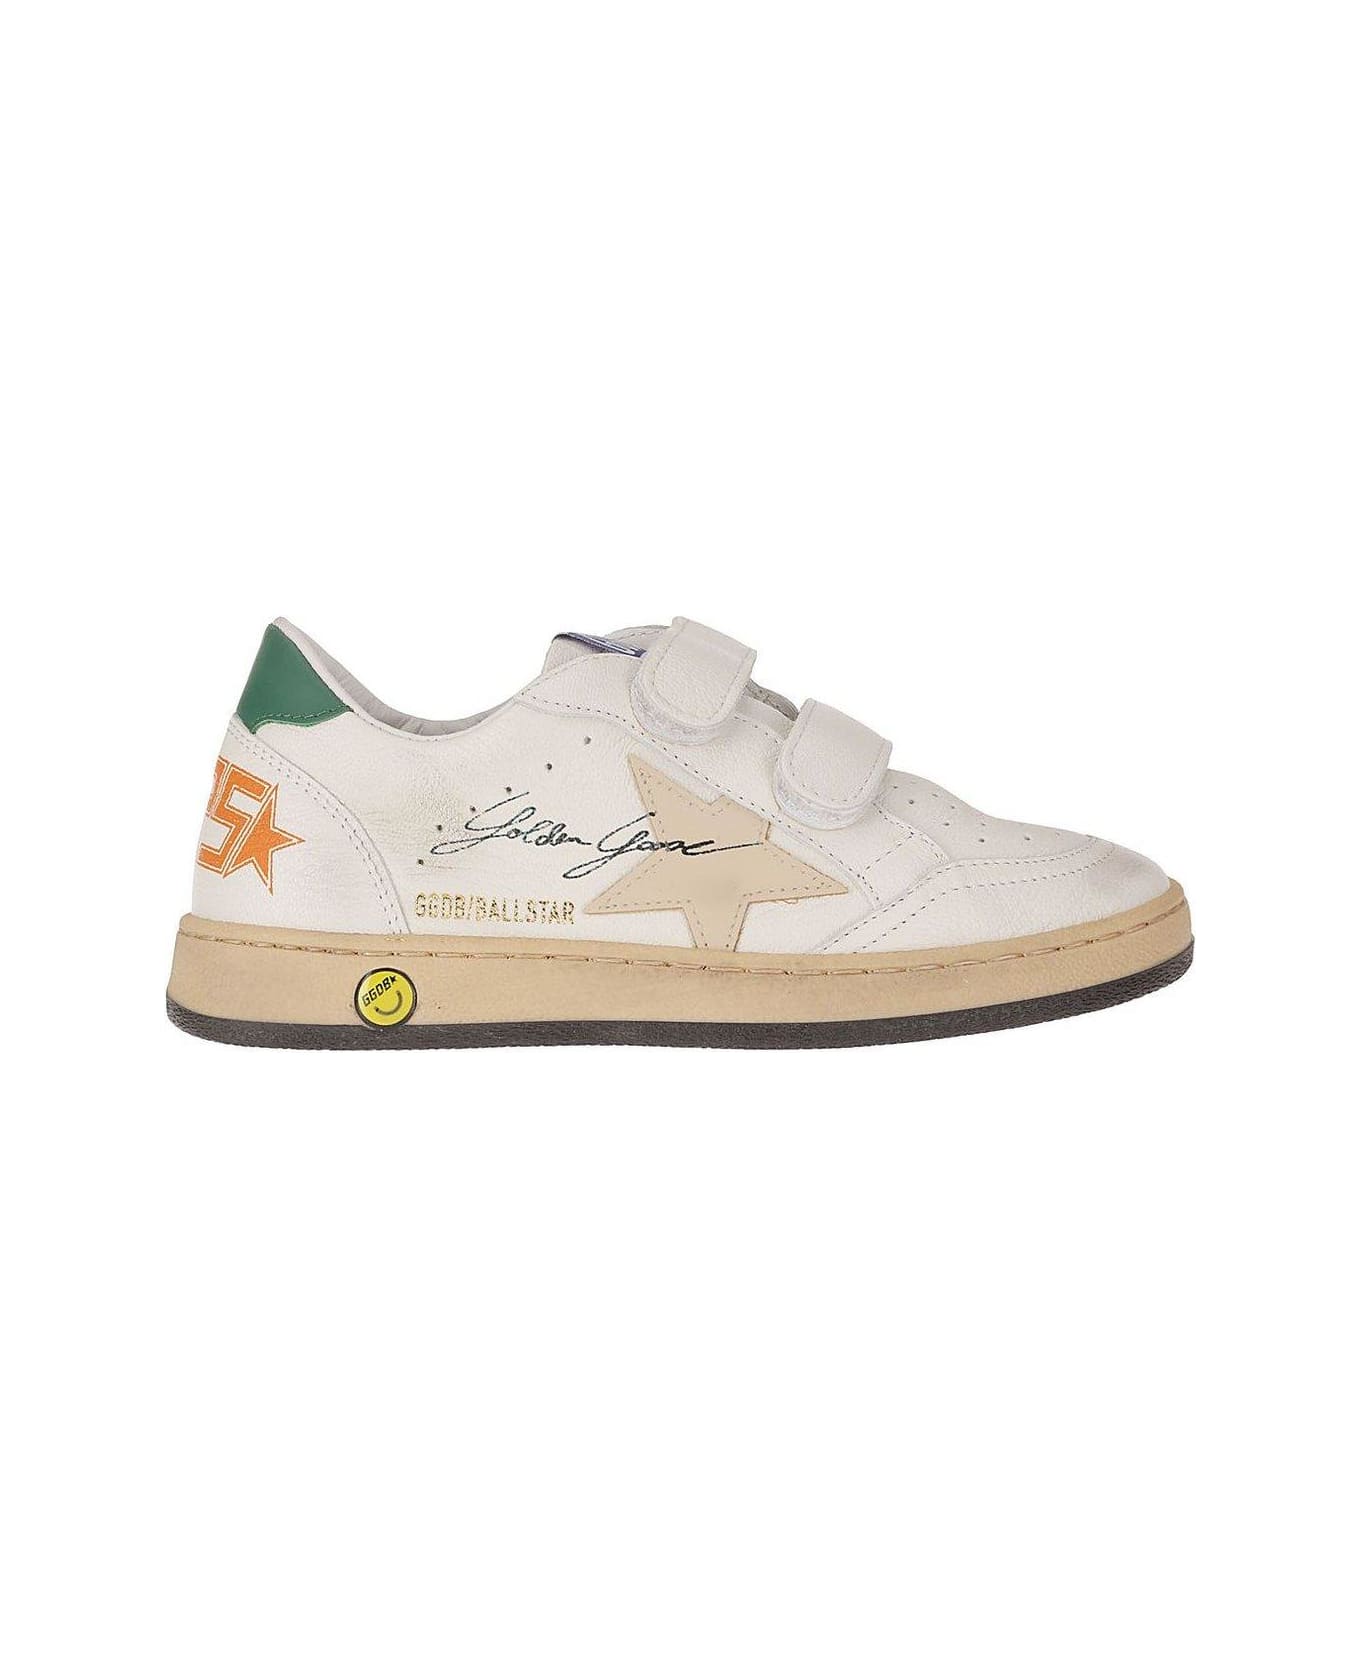 Golden Goose Round Toe Sneakers - White/Smoke Grey/Green